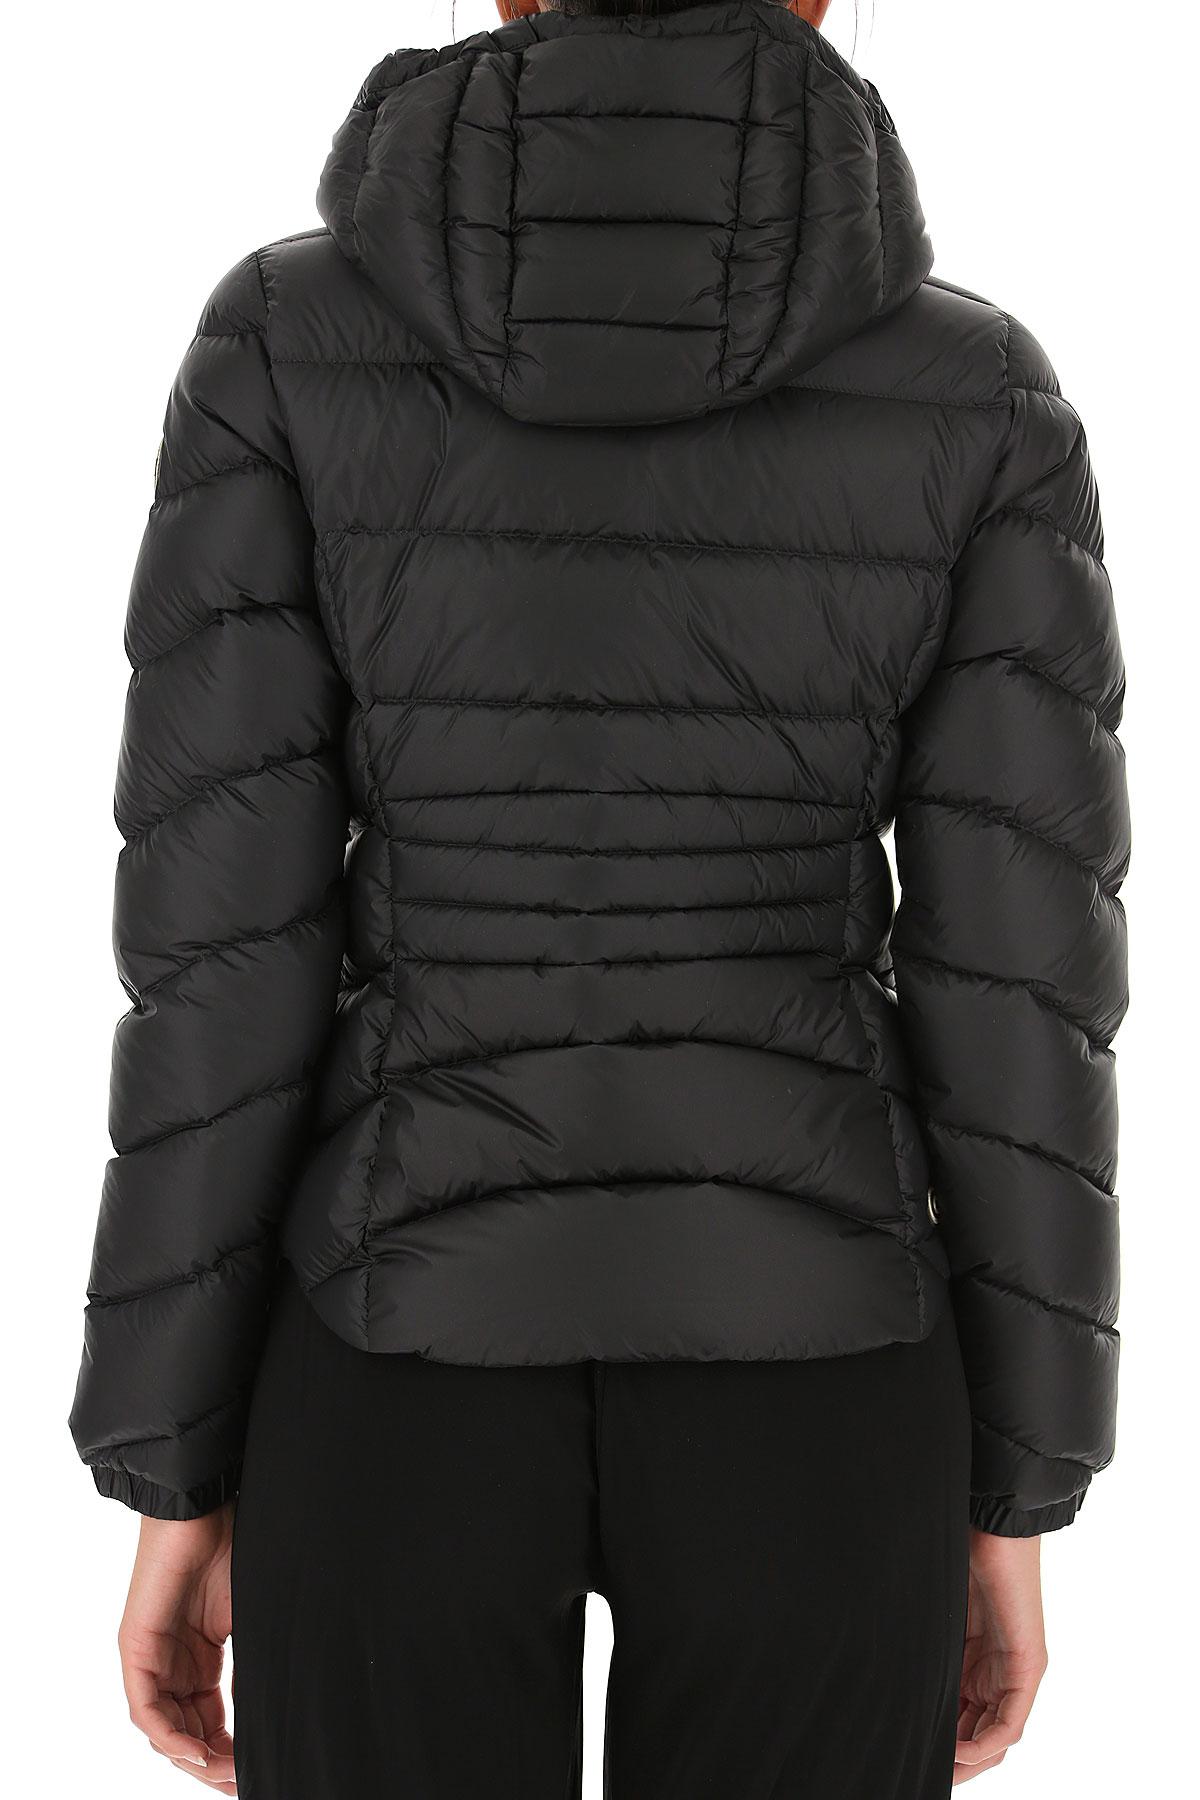 Colmar Synthetic Down Jacket For Women in Black - Lyst